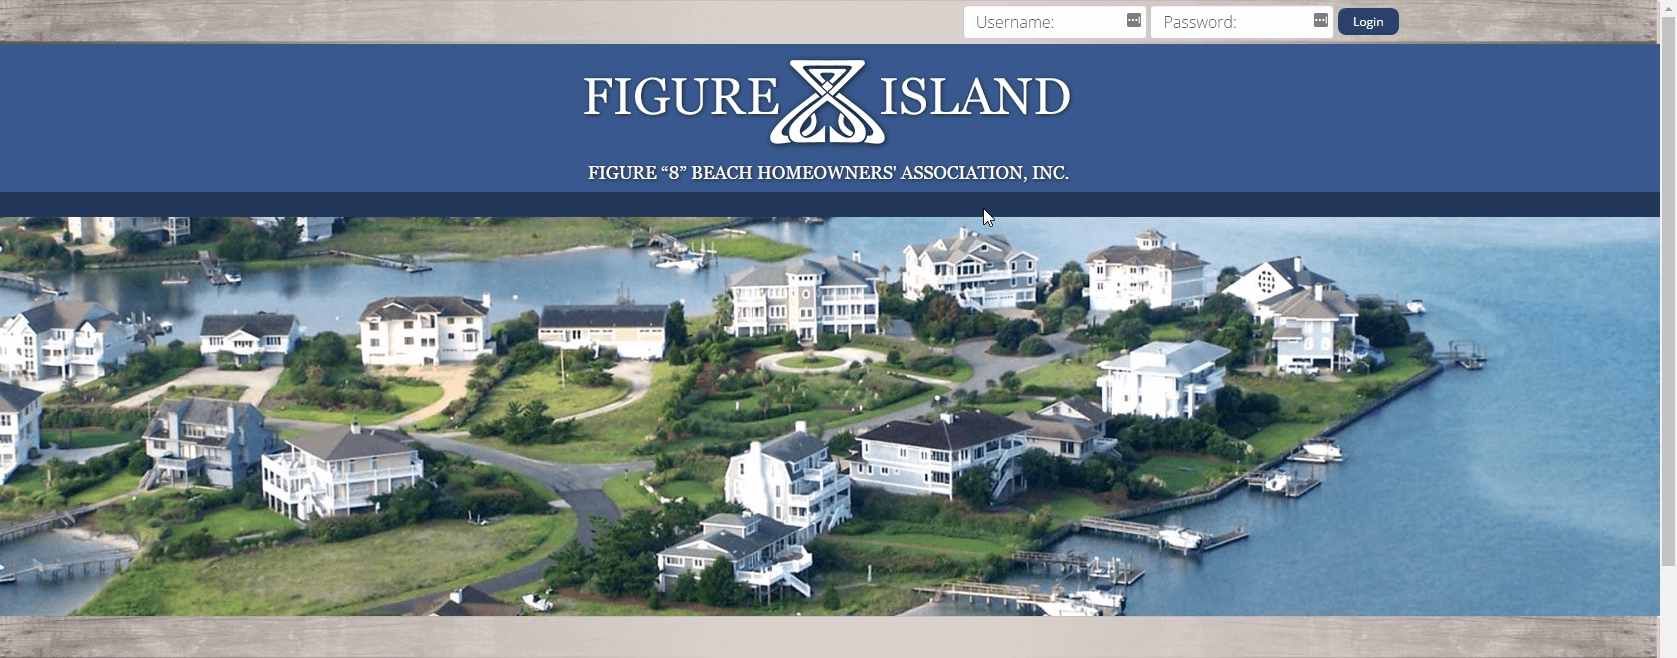 Figure Eight Homeowners Association, Inc.